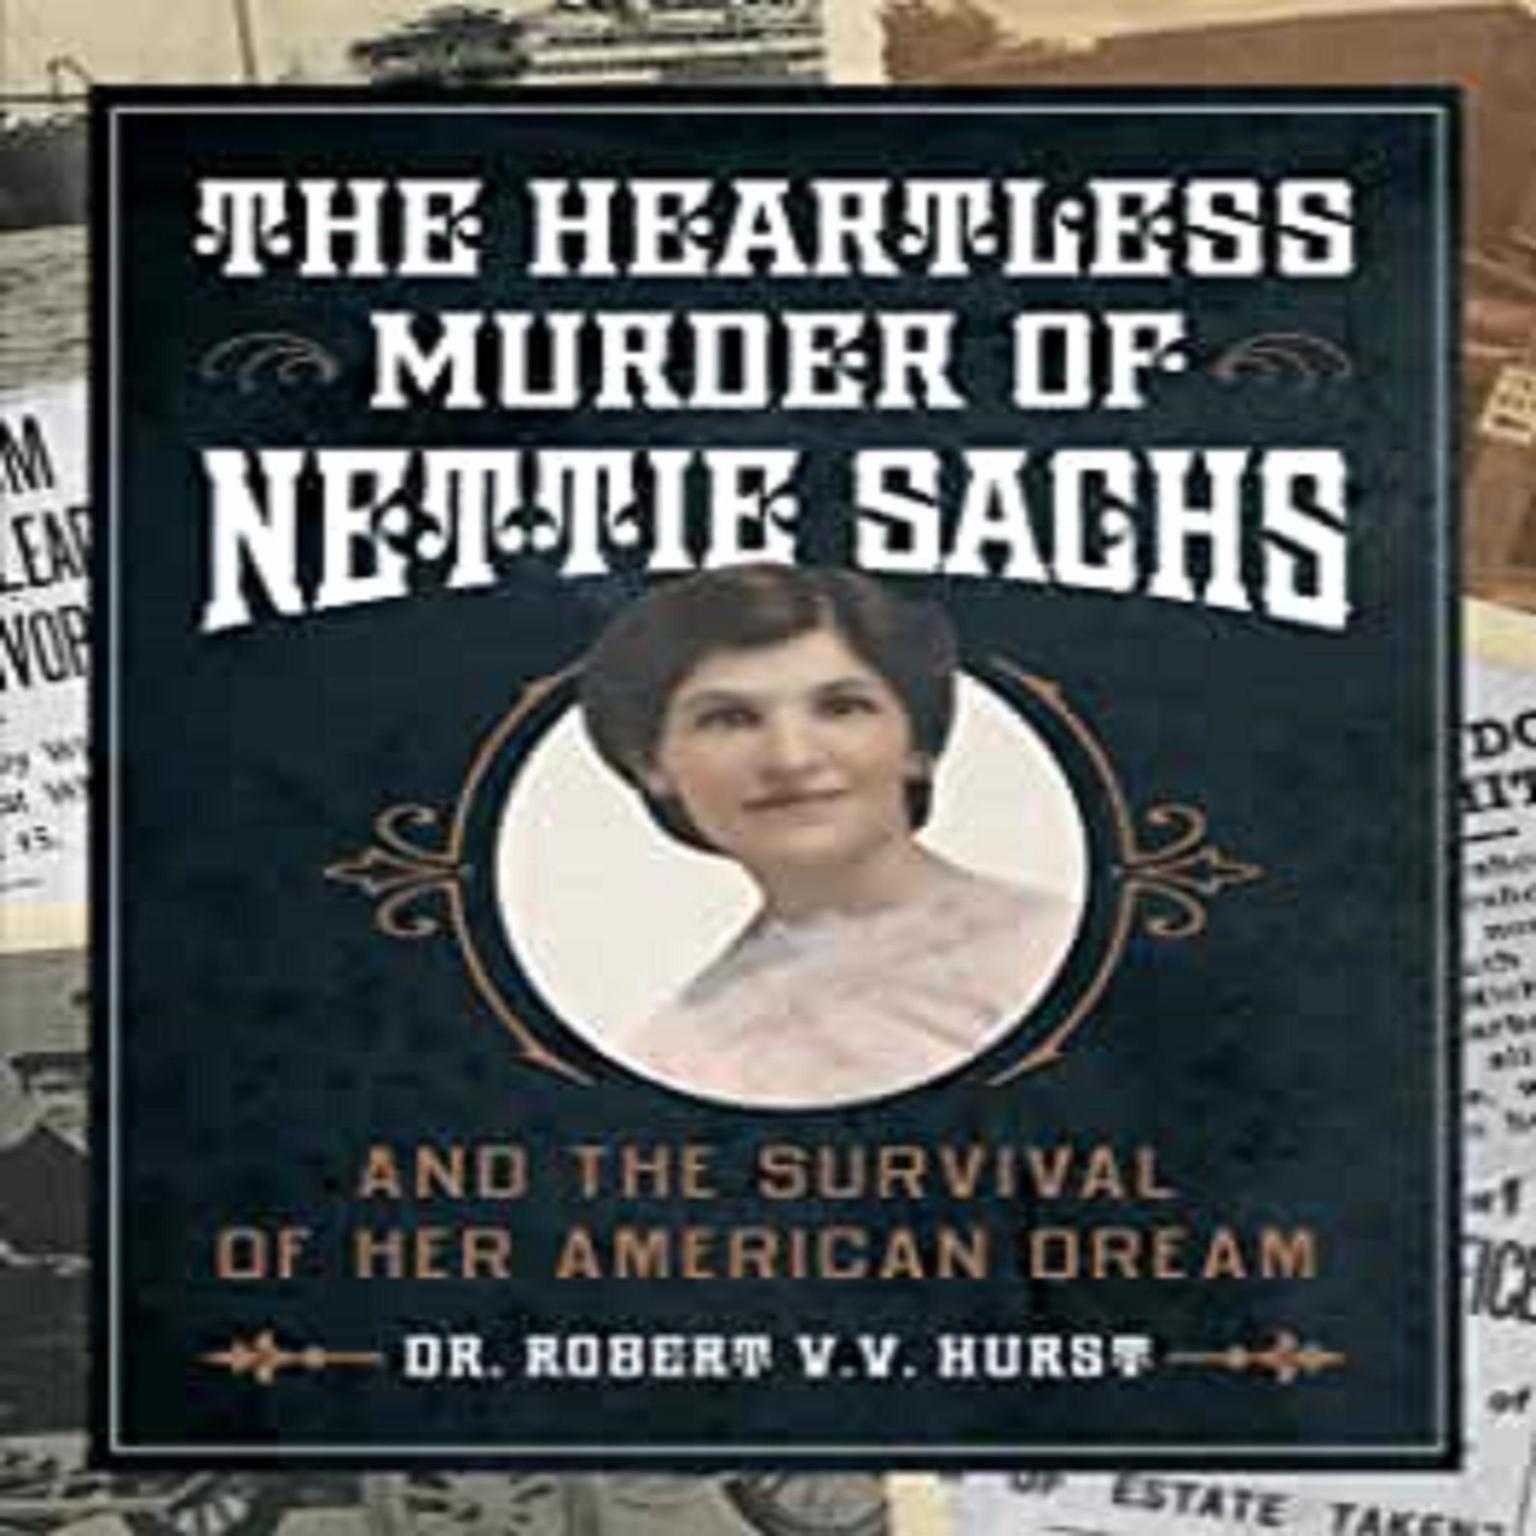 The Heartless Murder of Nettie Sachs: And The Survival Of Her American Dream Audiobook, by Robert V. V. Hurst